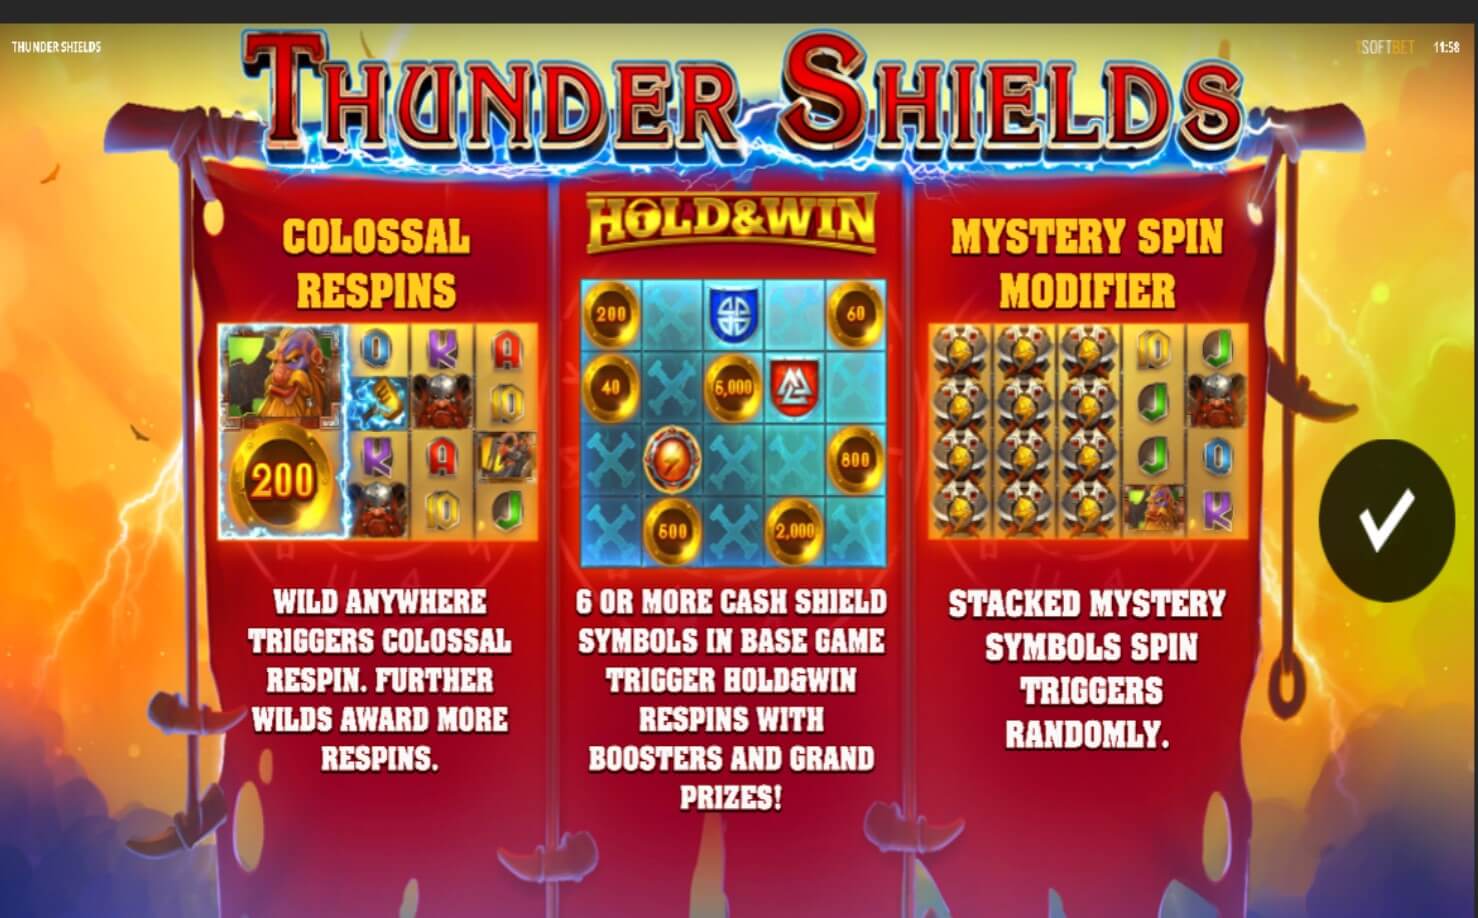 Thunder Shields Spel proces